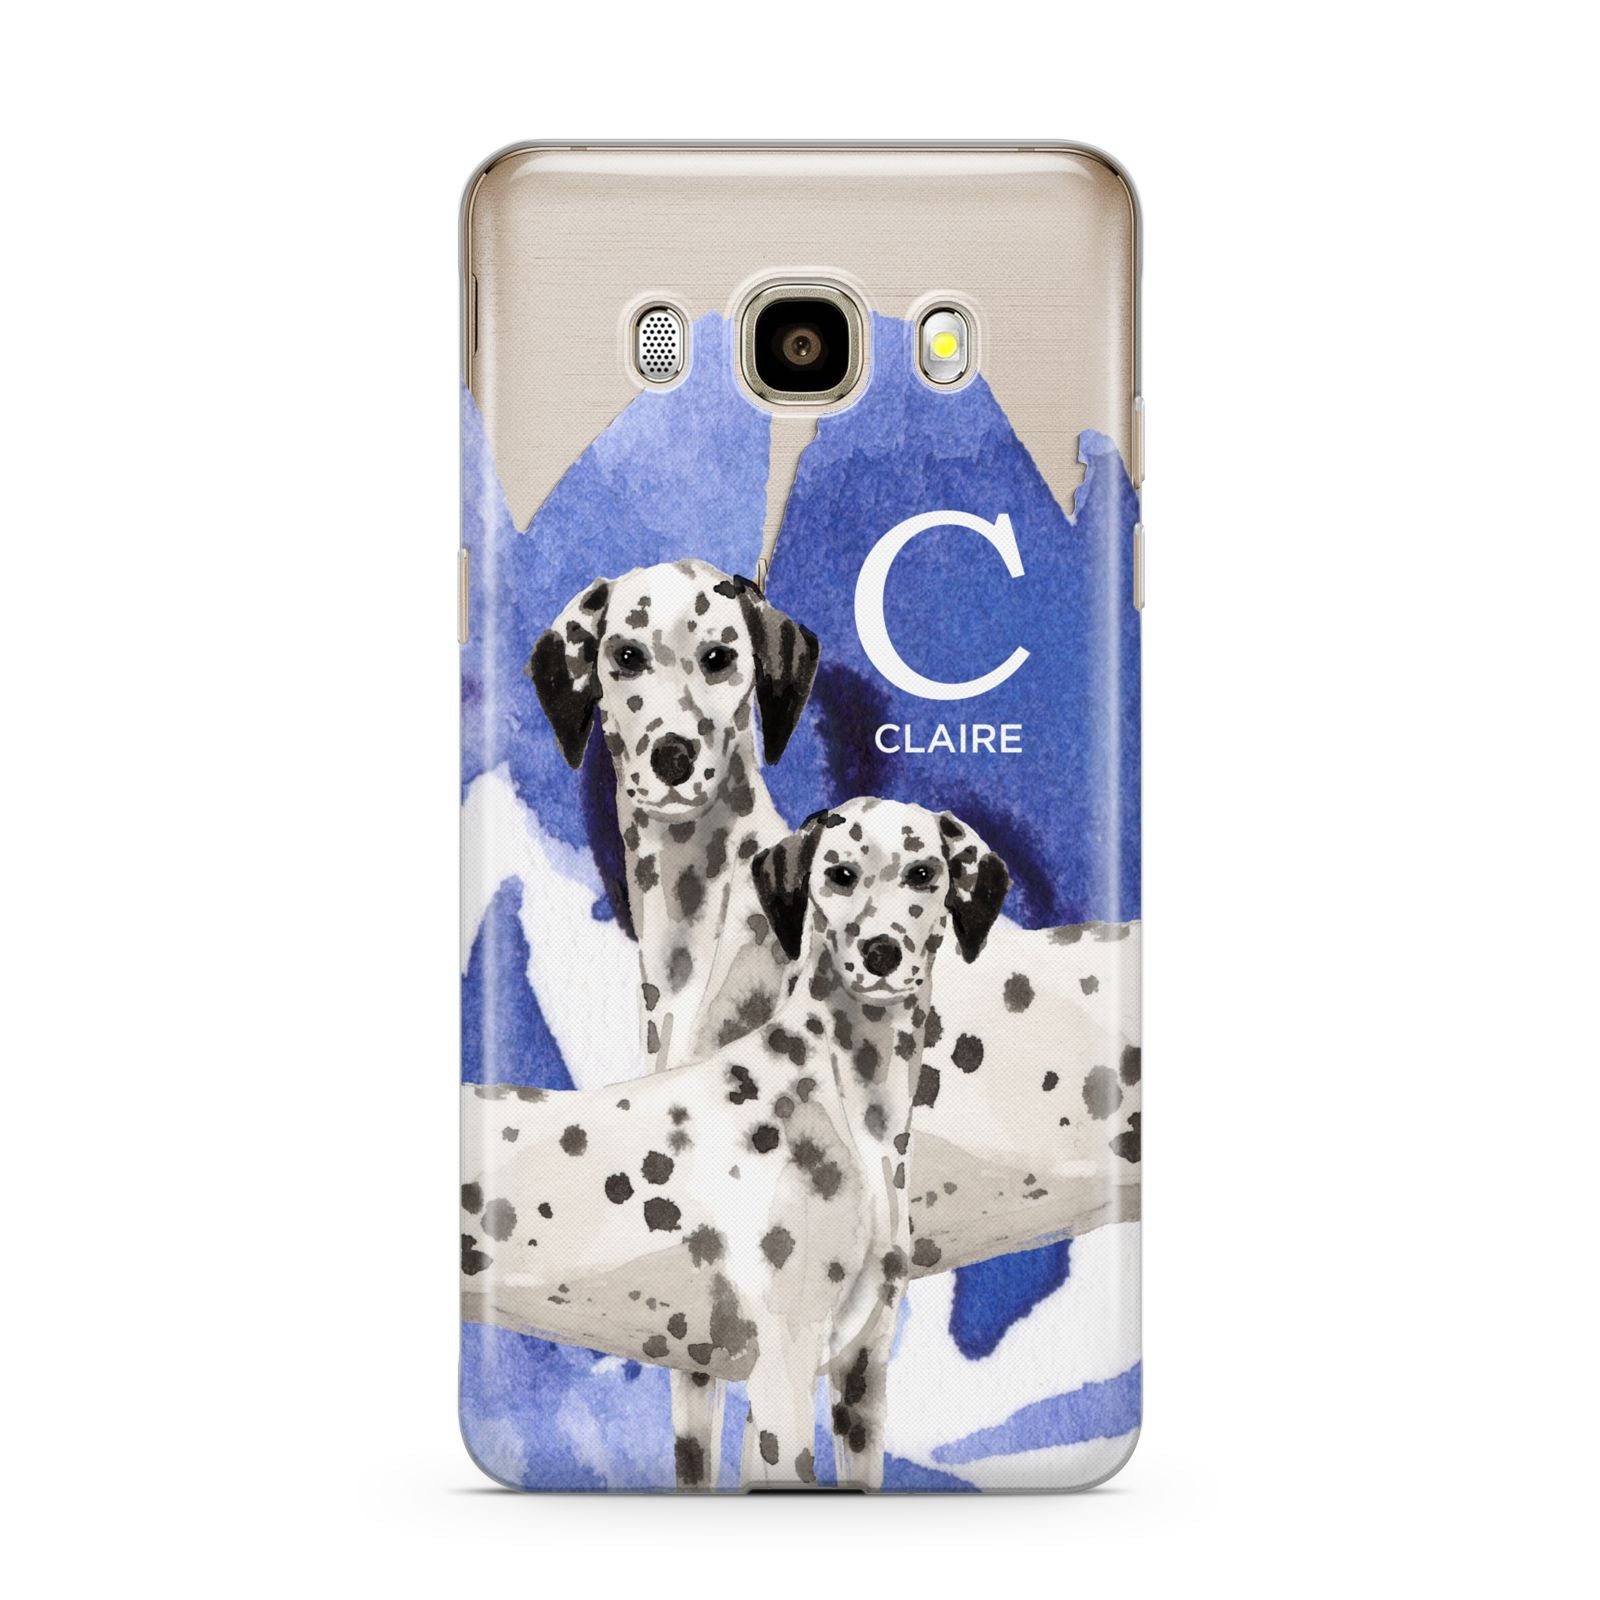 Personalised Dalmatian Samsung Galaxy J7 2016 Case on gold phone